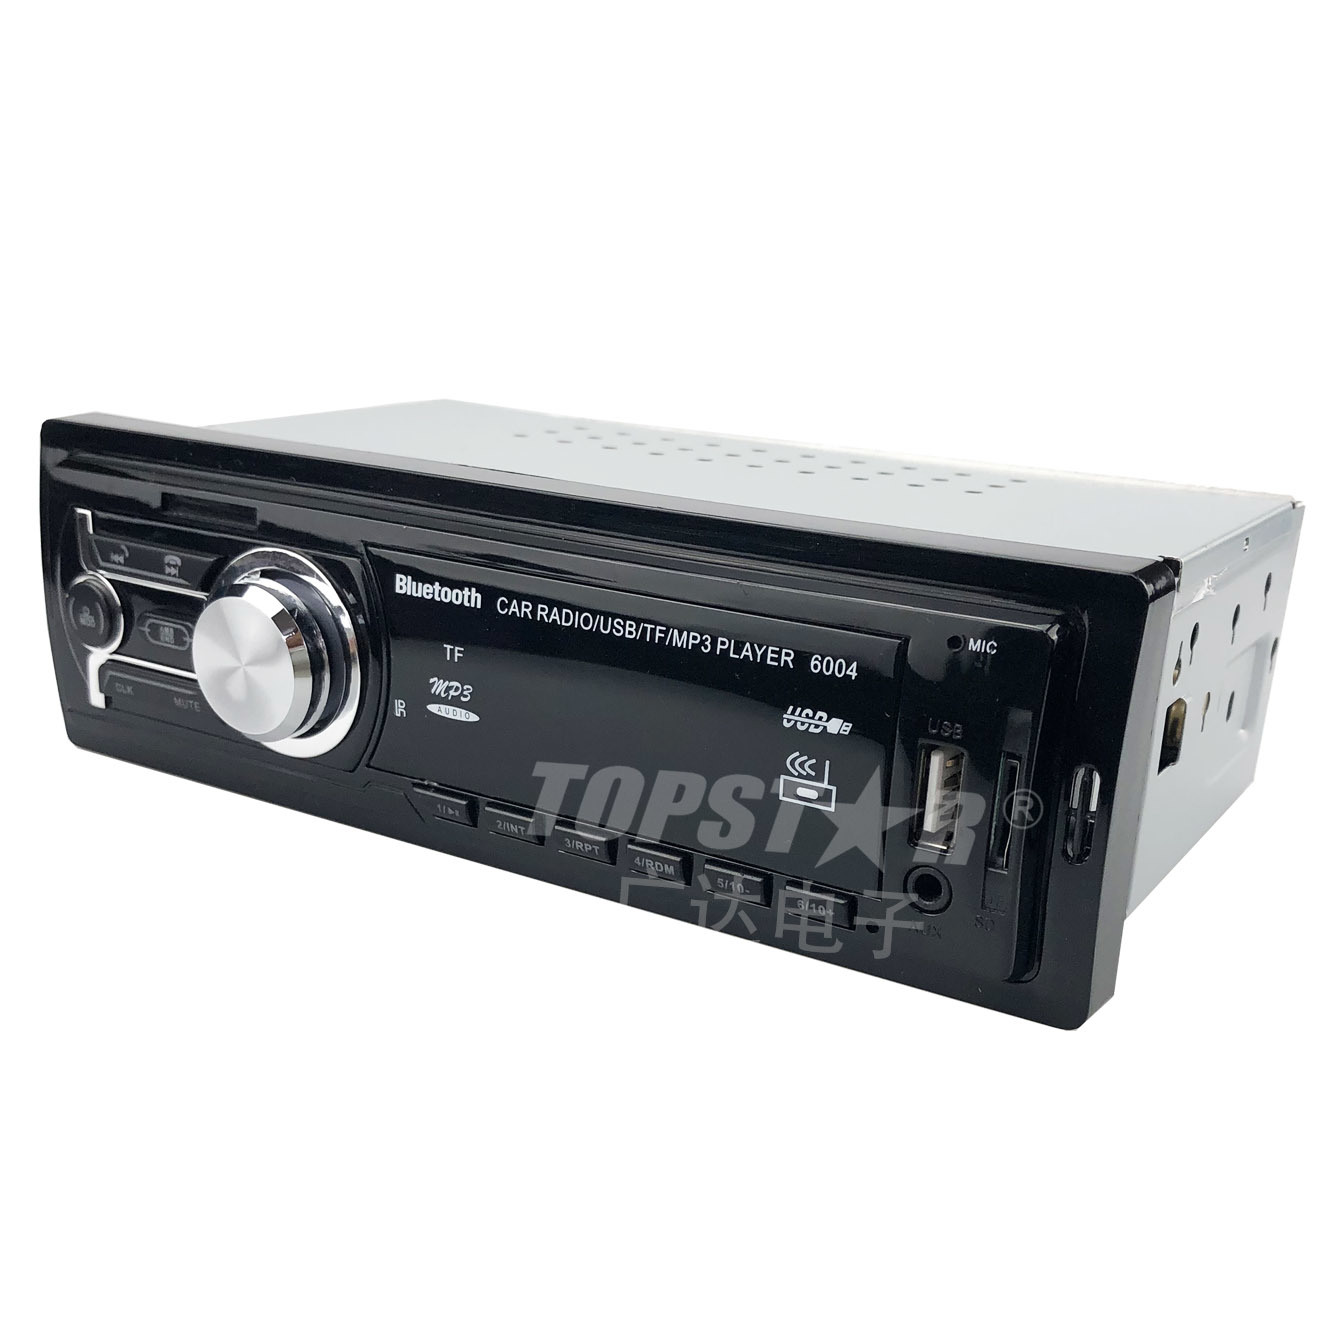 Reprodutor de mp3 para carro, reprodutor de vídeo estéreo para carro, áudio mp3, áudio estéreo automático, painel fixo, reprodutor de mp3 estéreo para carro